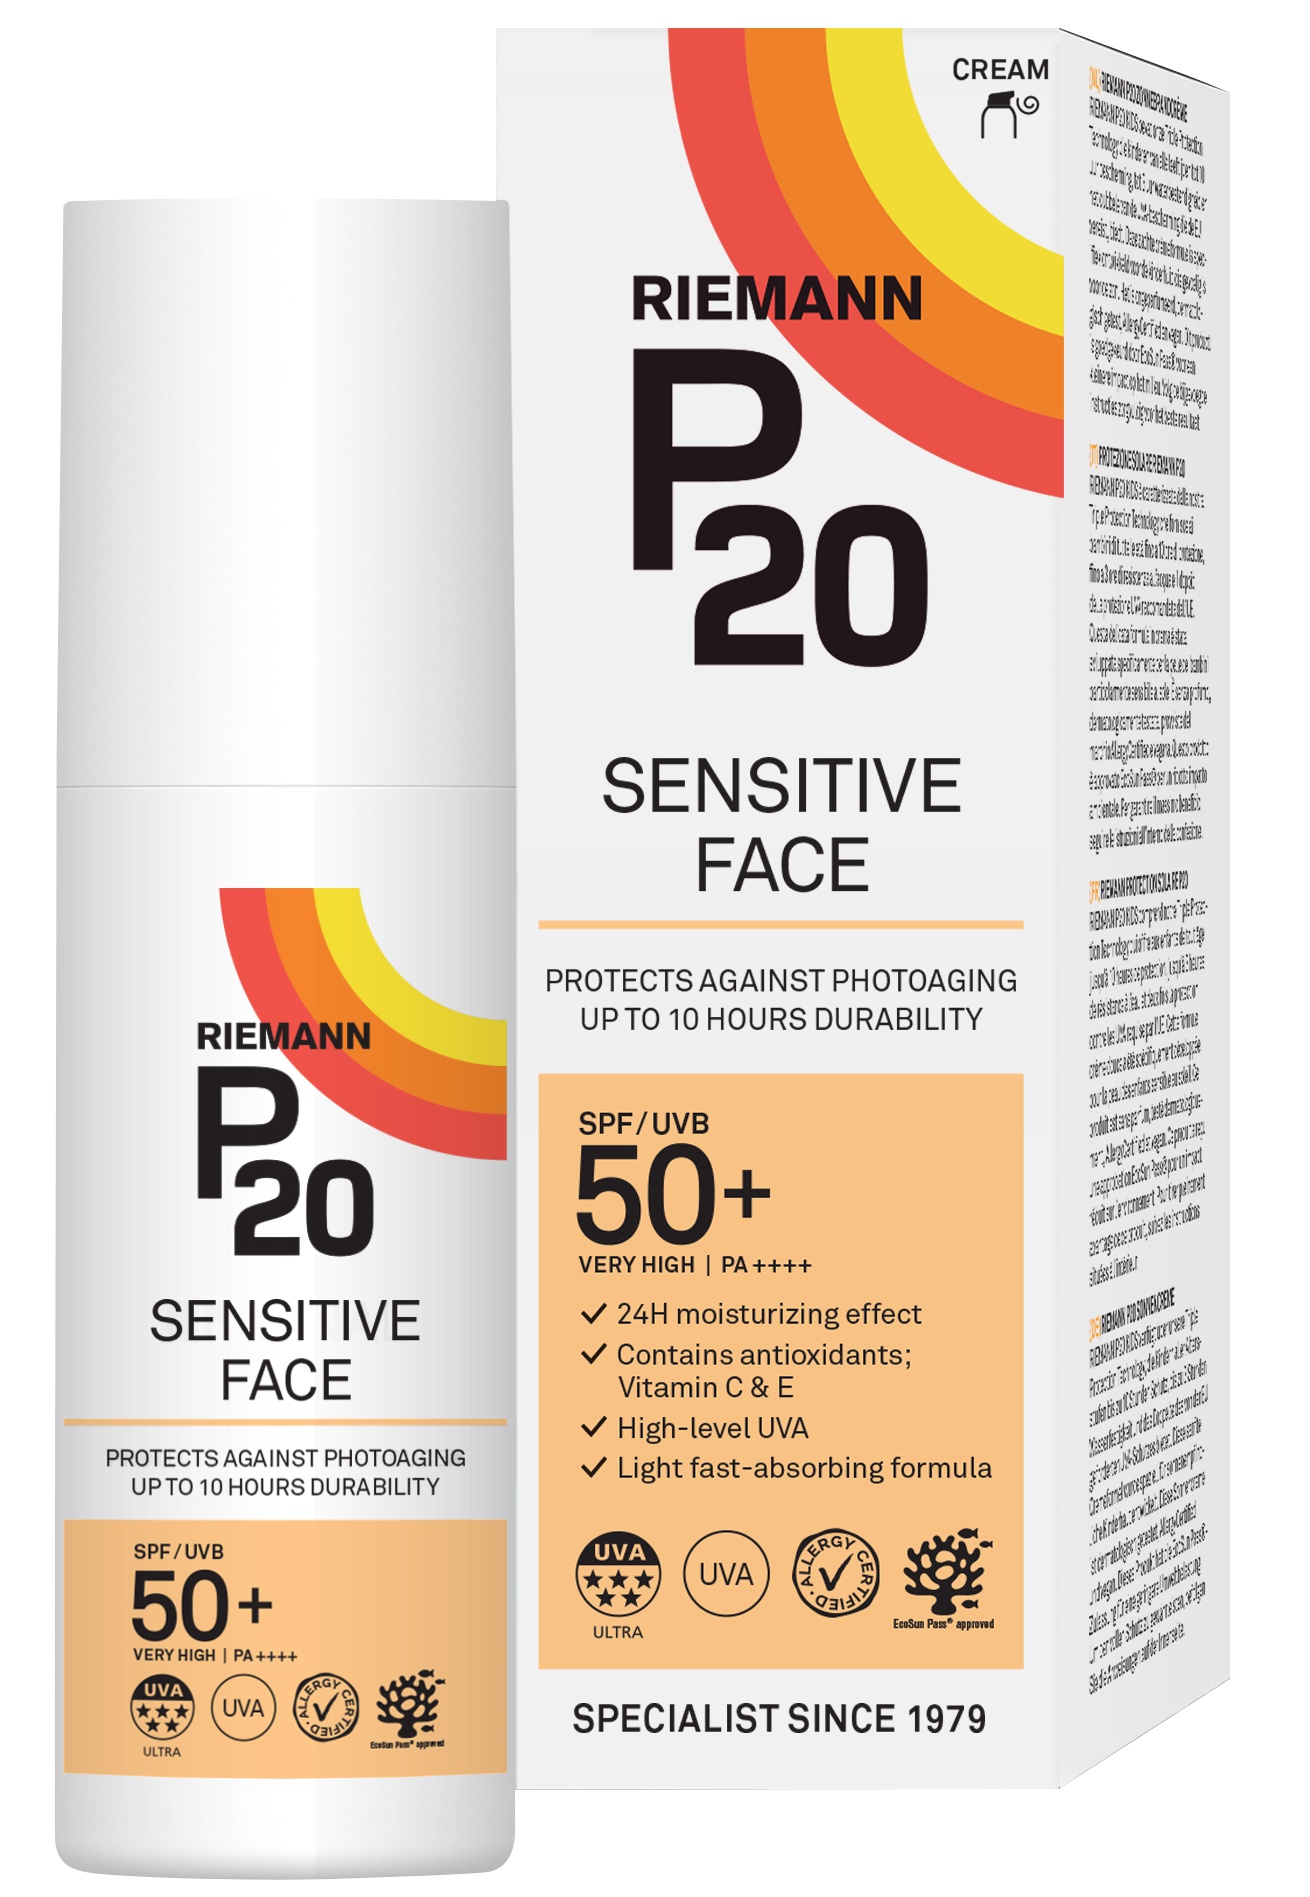 Riemann P20 Sensitive Face SPF 50+